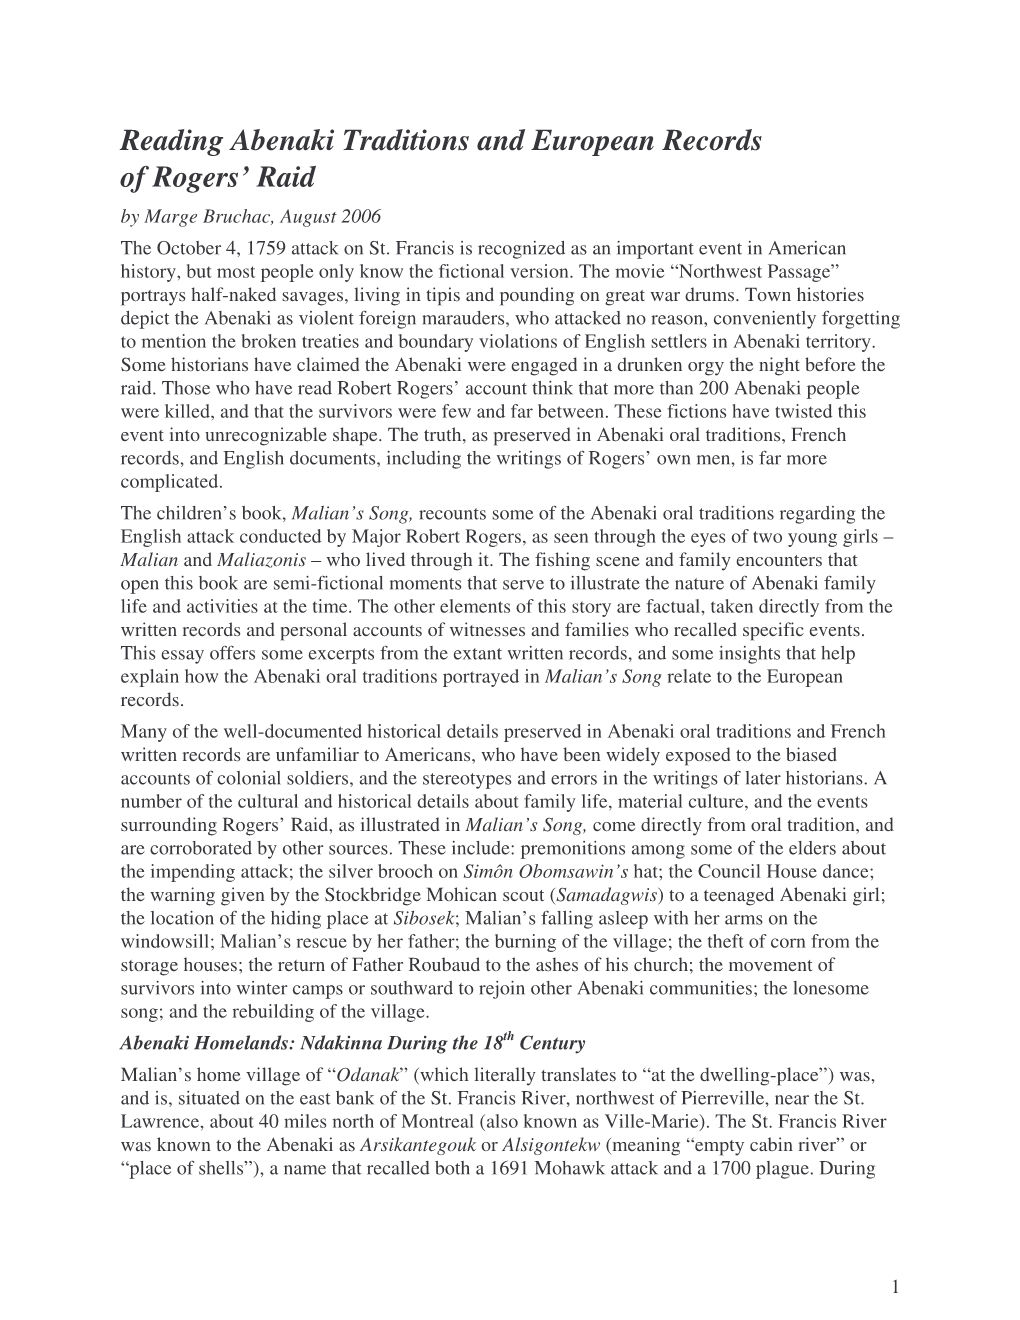 Reading Abenaki Traditions and European Records of Rogers' Raid